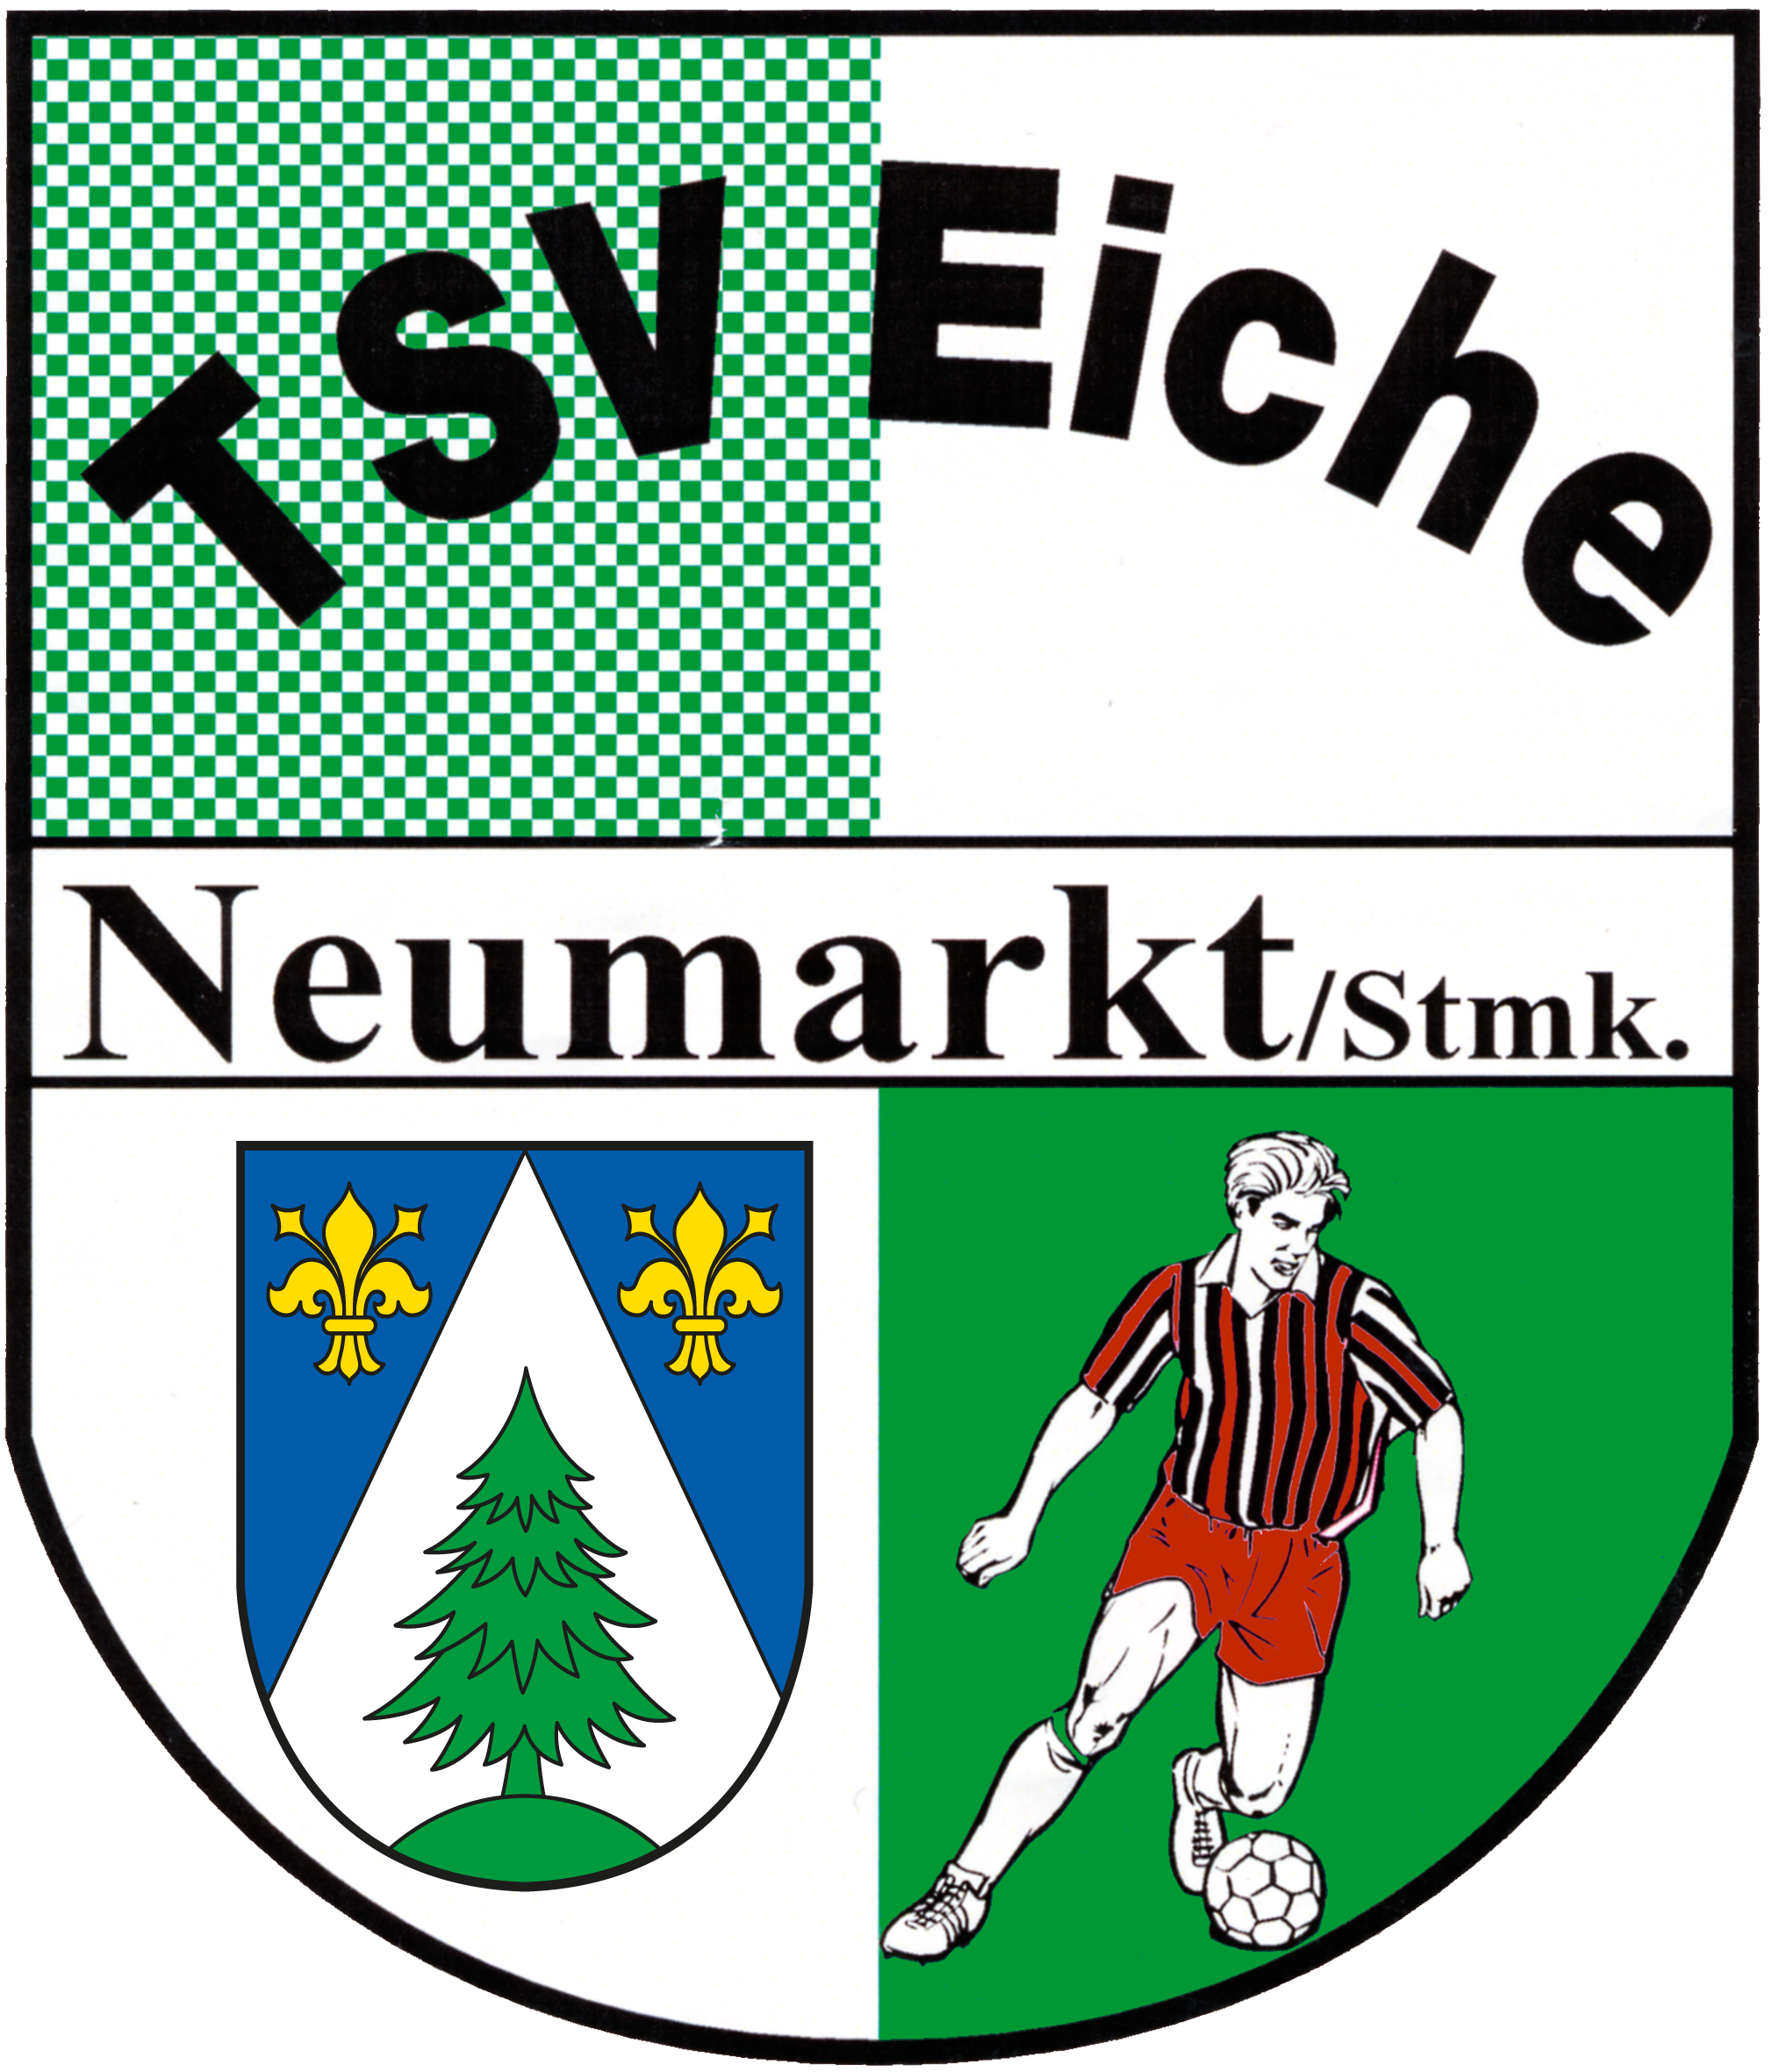 SV Stockerau - FC Klosterneuburg, Live-Ticker, 06.10.2023